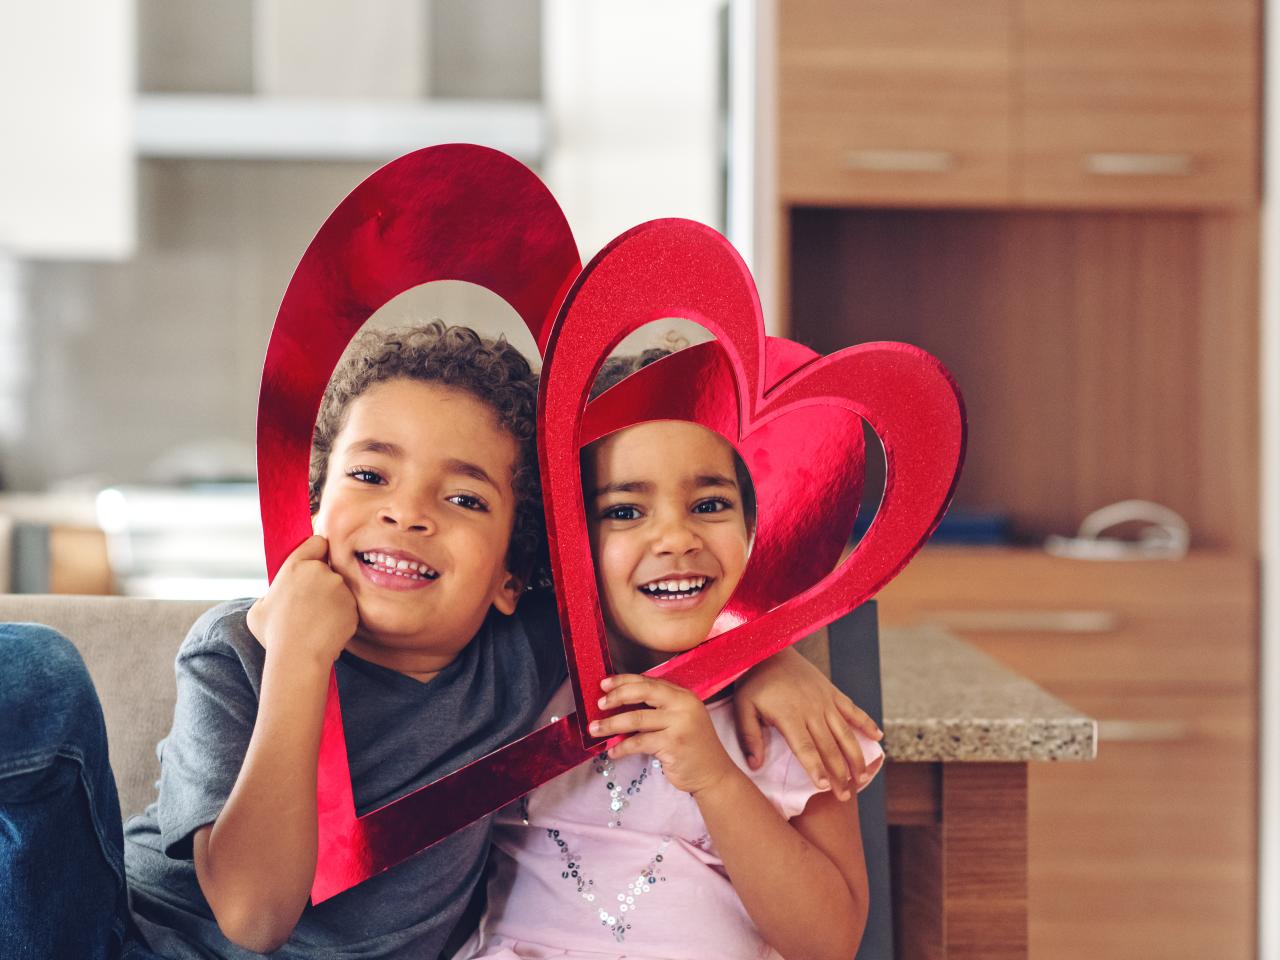 25+ Easy Toddler Valentine Crafts For Valentine's Day